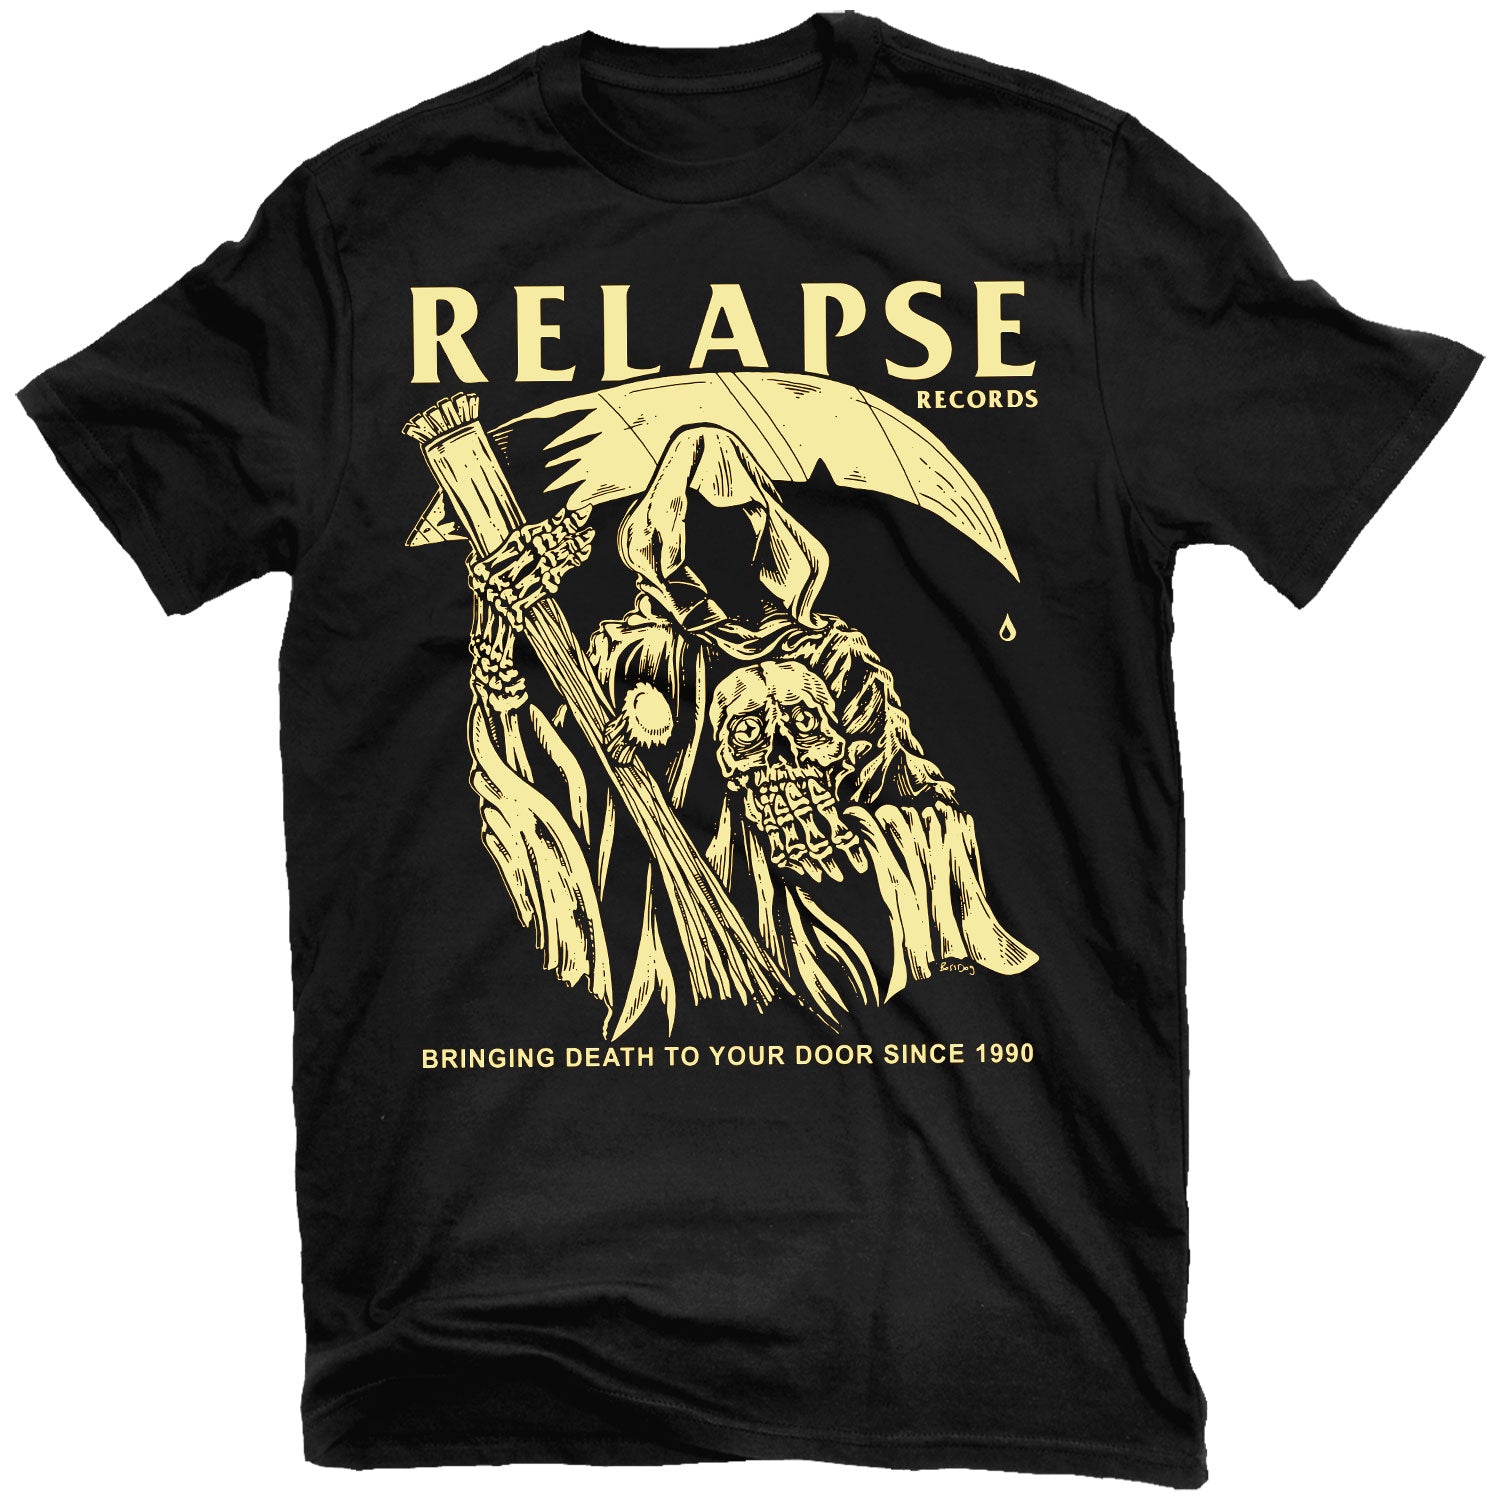 Relapse Records "Reaper" T-Shirt